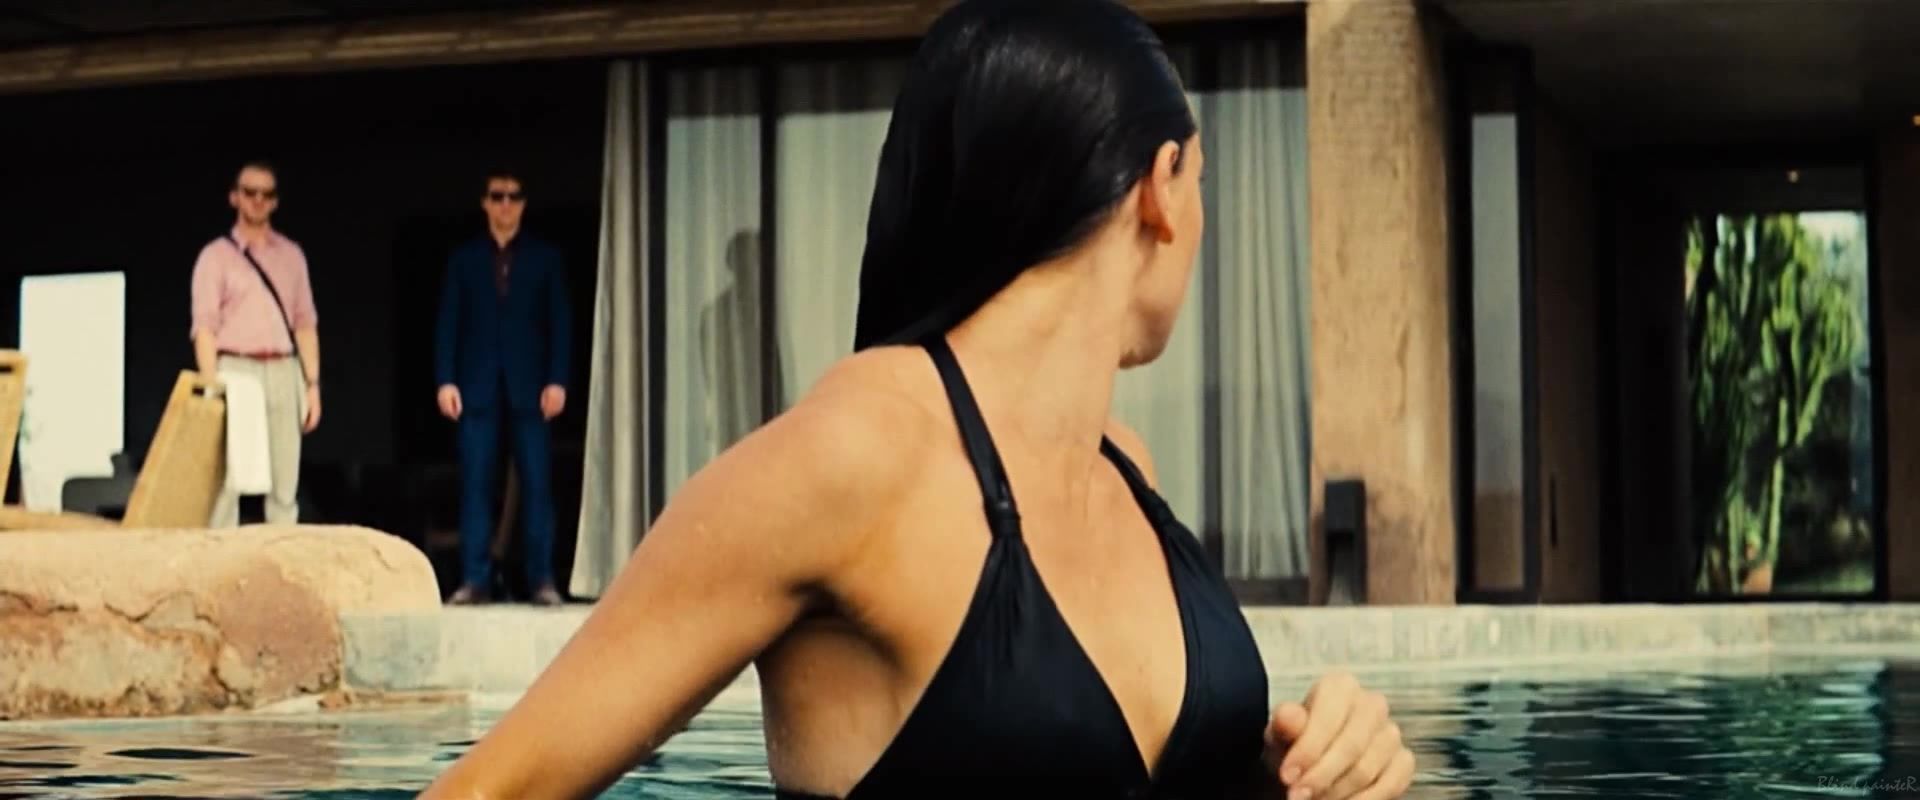 Sloppy Blowjob Rebecca Ferguson nude - Mission Impossible Rogue Nation (2015) Fling - 1